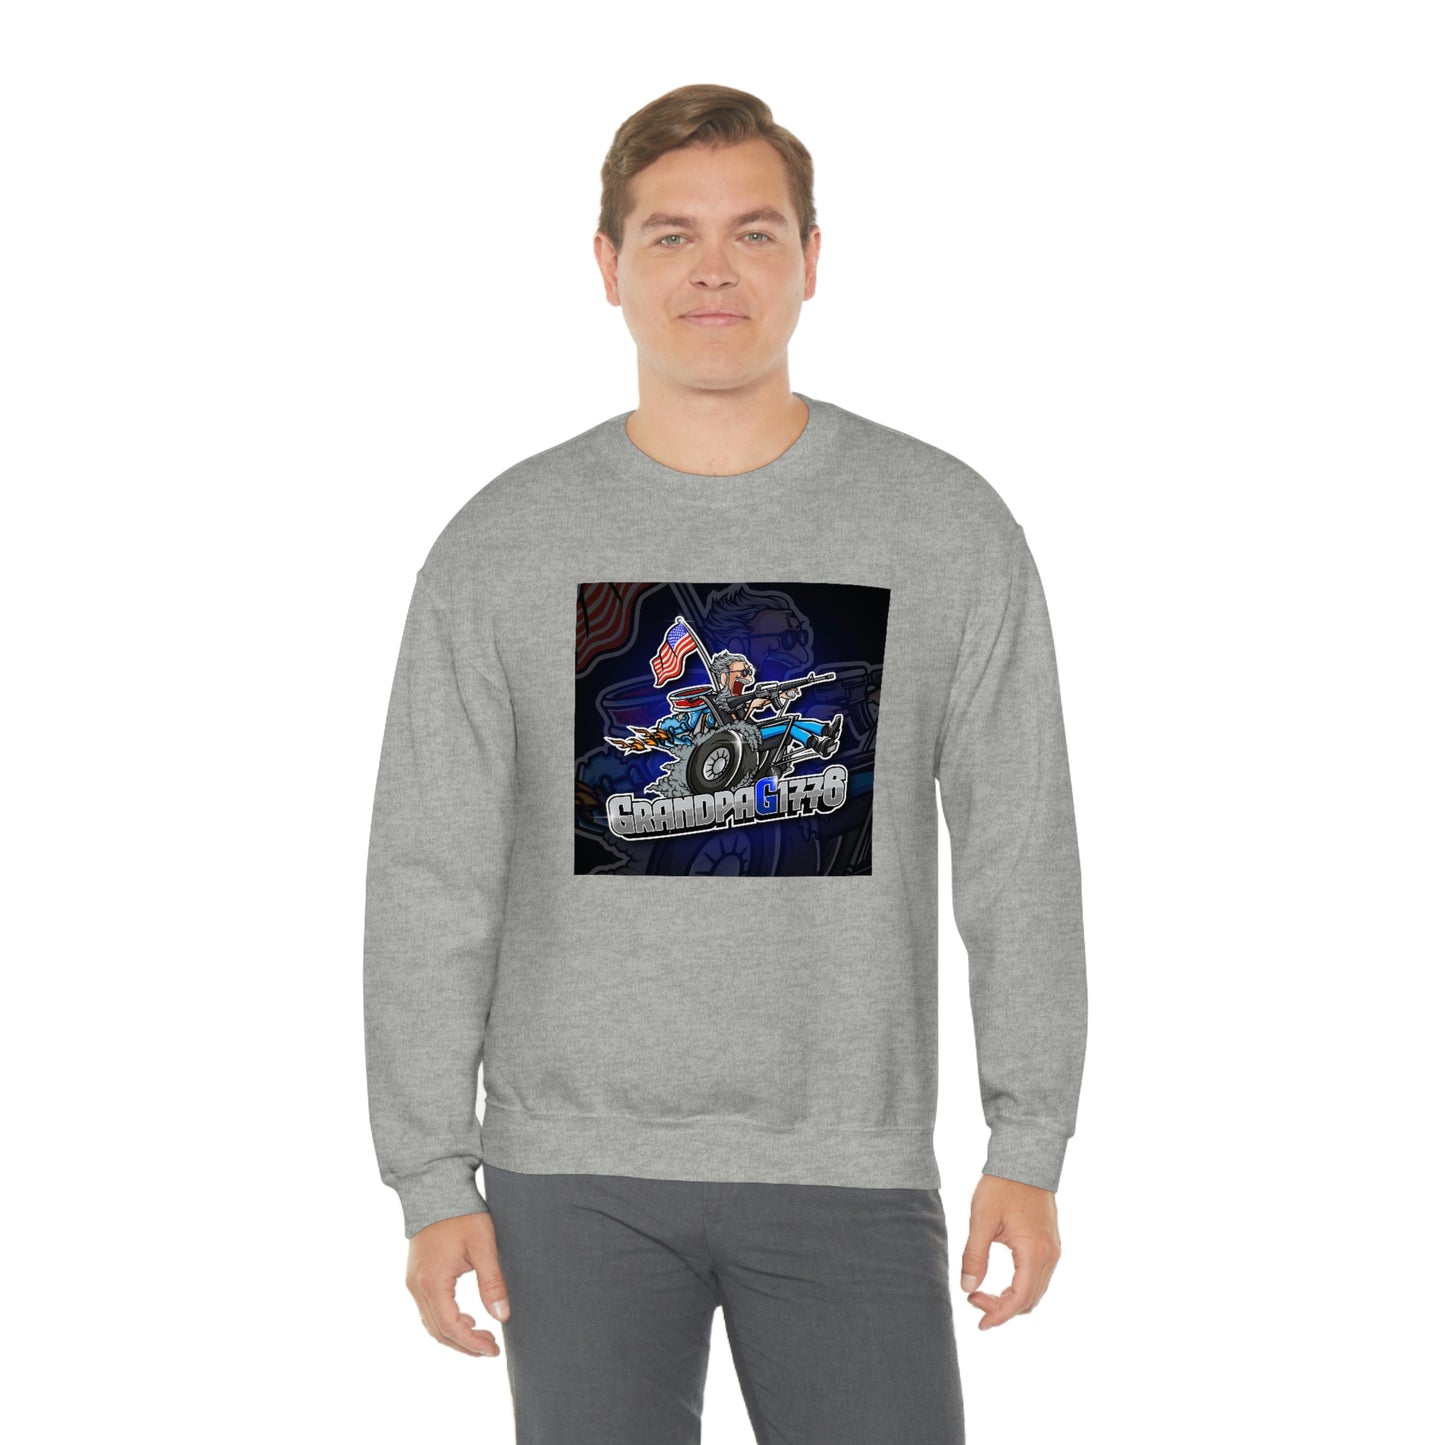 GrandpaG Silhouette Unisex Sweatshirt